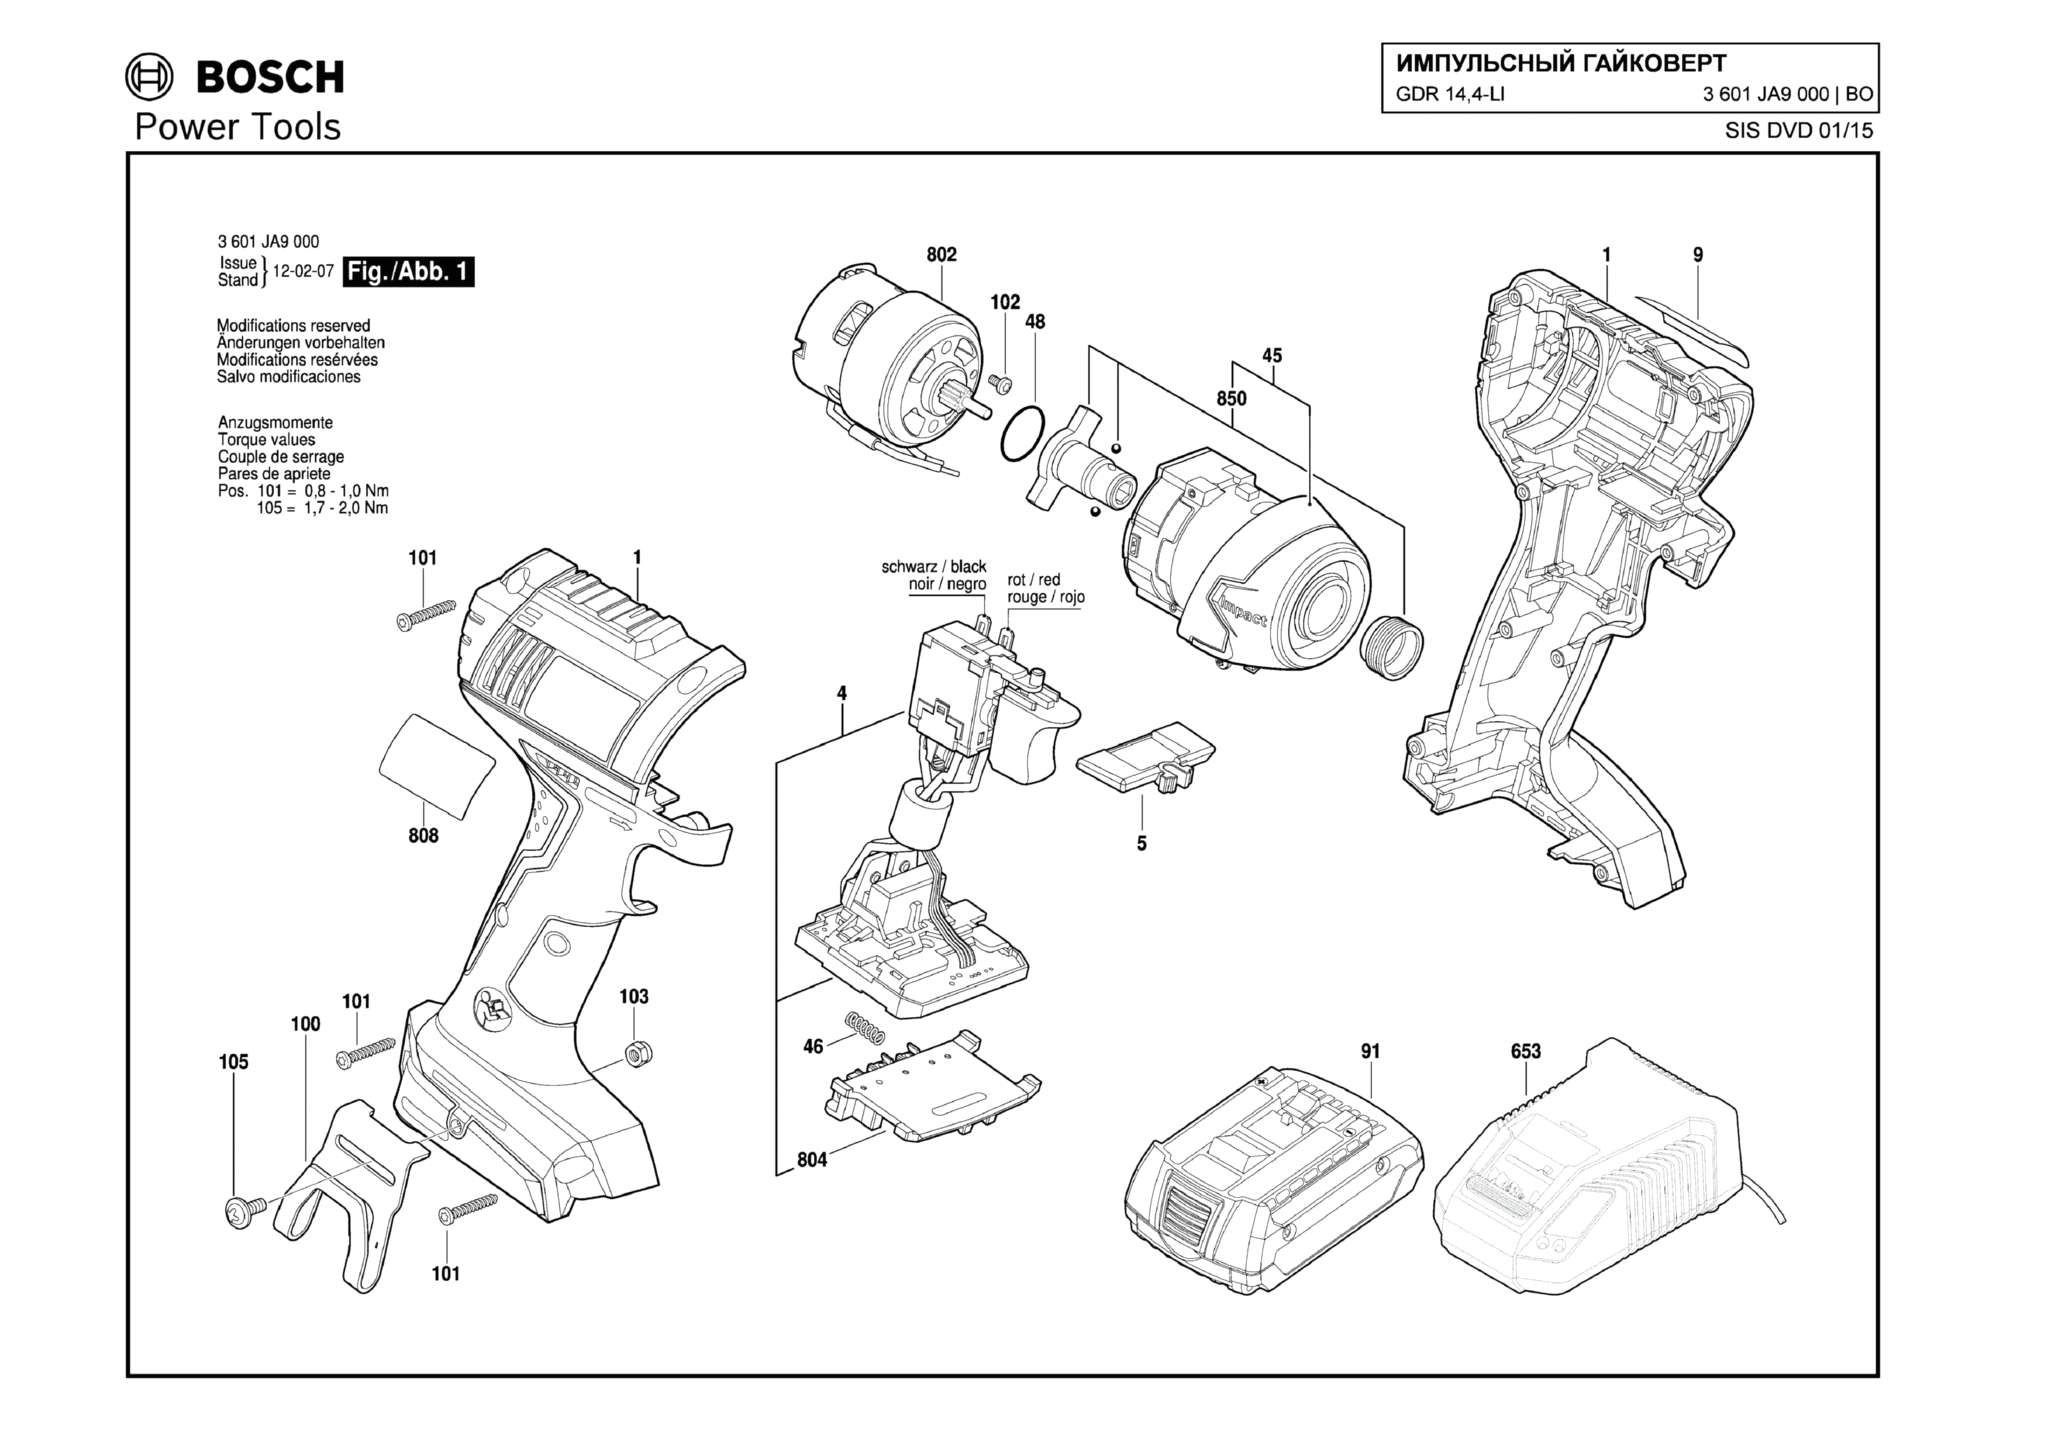 Запчасти, схема и деталировка Bosch GDR 14,4-LI (ТИП 3601JA9000)